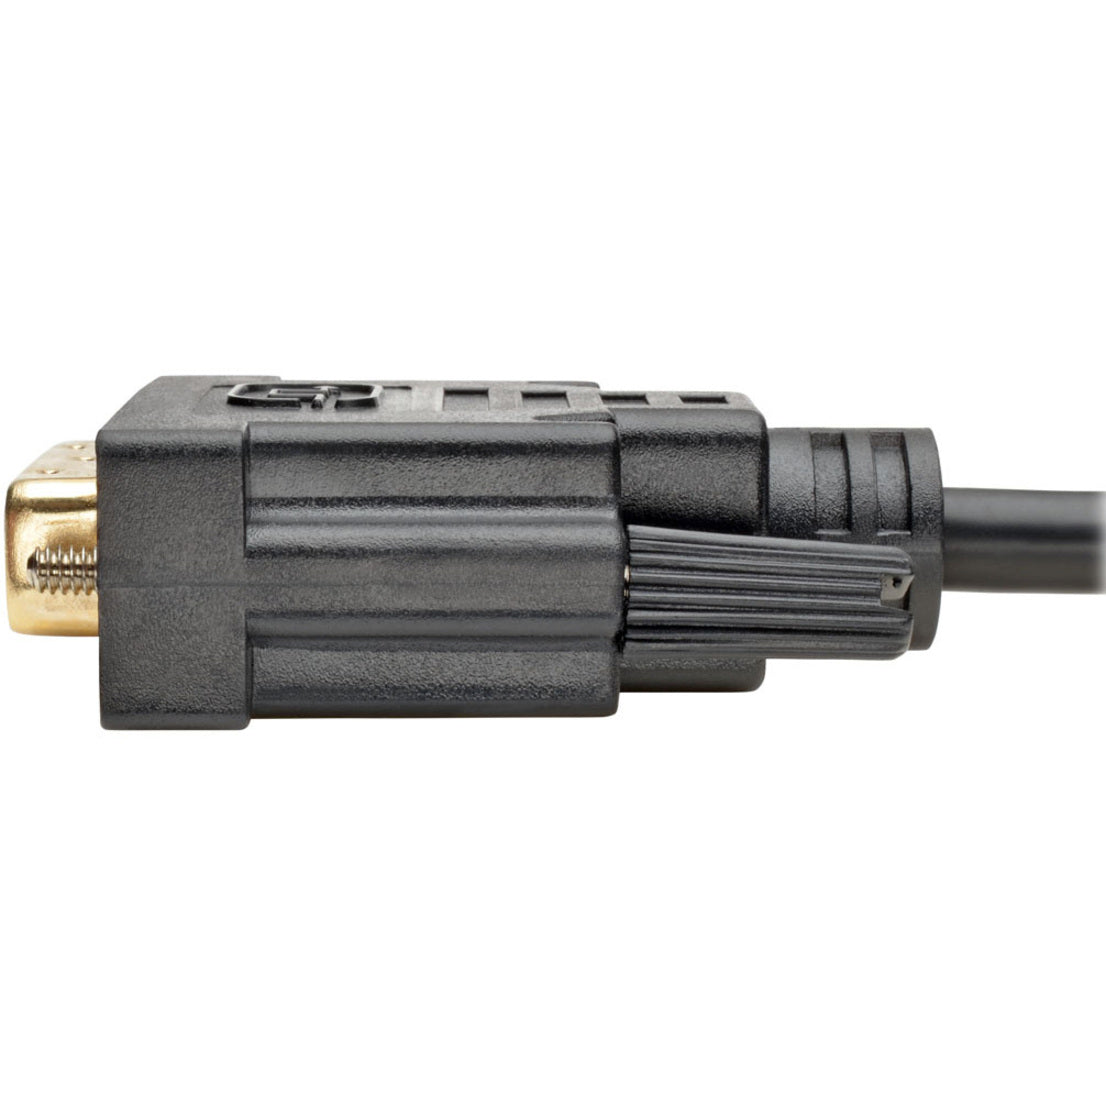 Tripp Lite P561-020 DVI-D Video Cable, 20 ft, Molded, Flexible, Gold-Plated Connectors, EMI/RF Protection